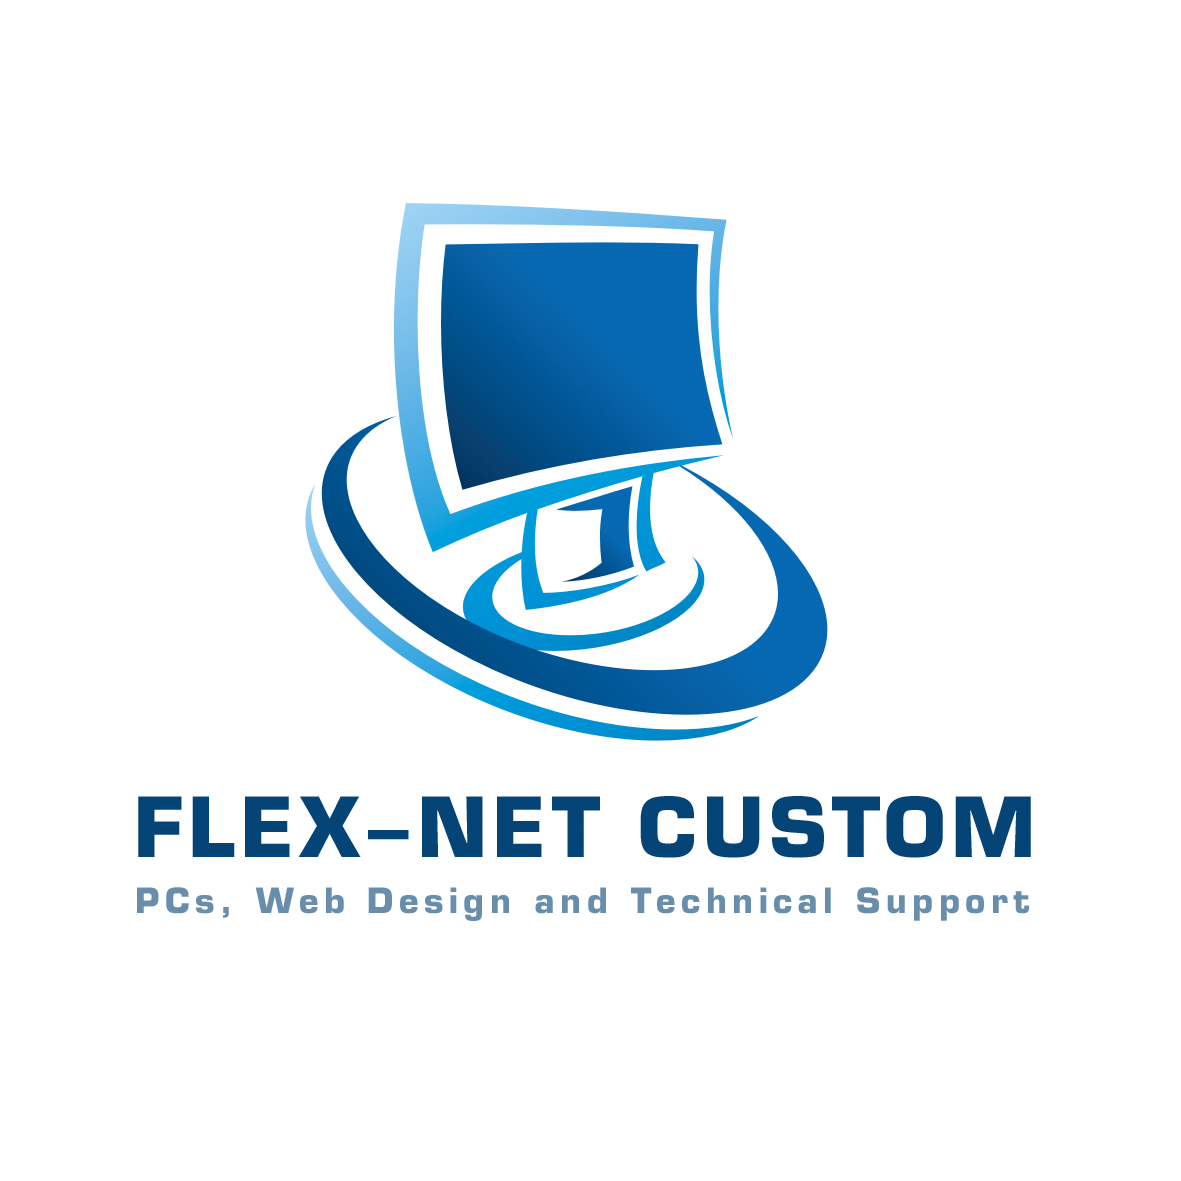 FLEX-NET CUSTOM